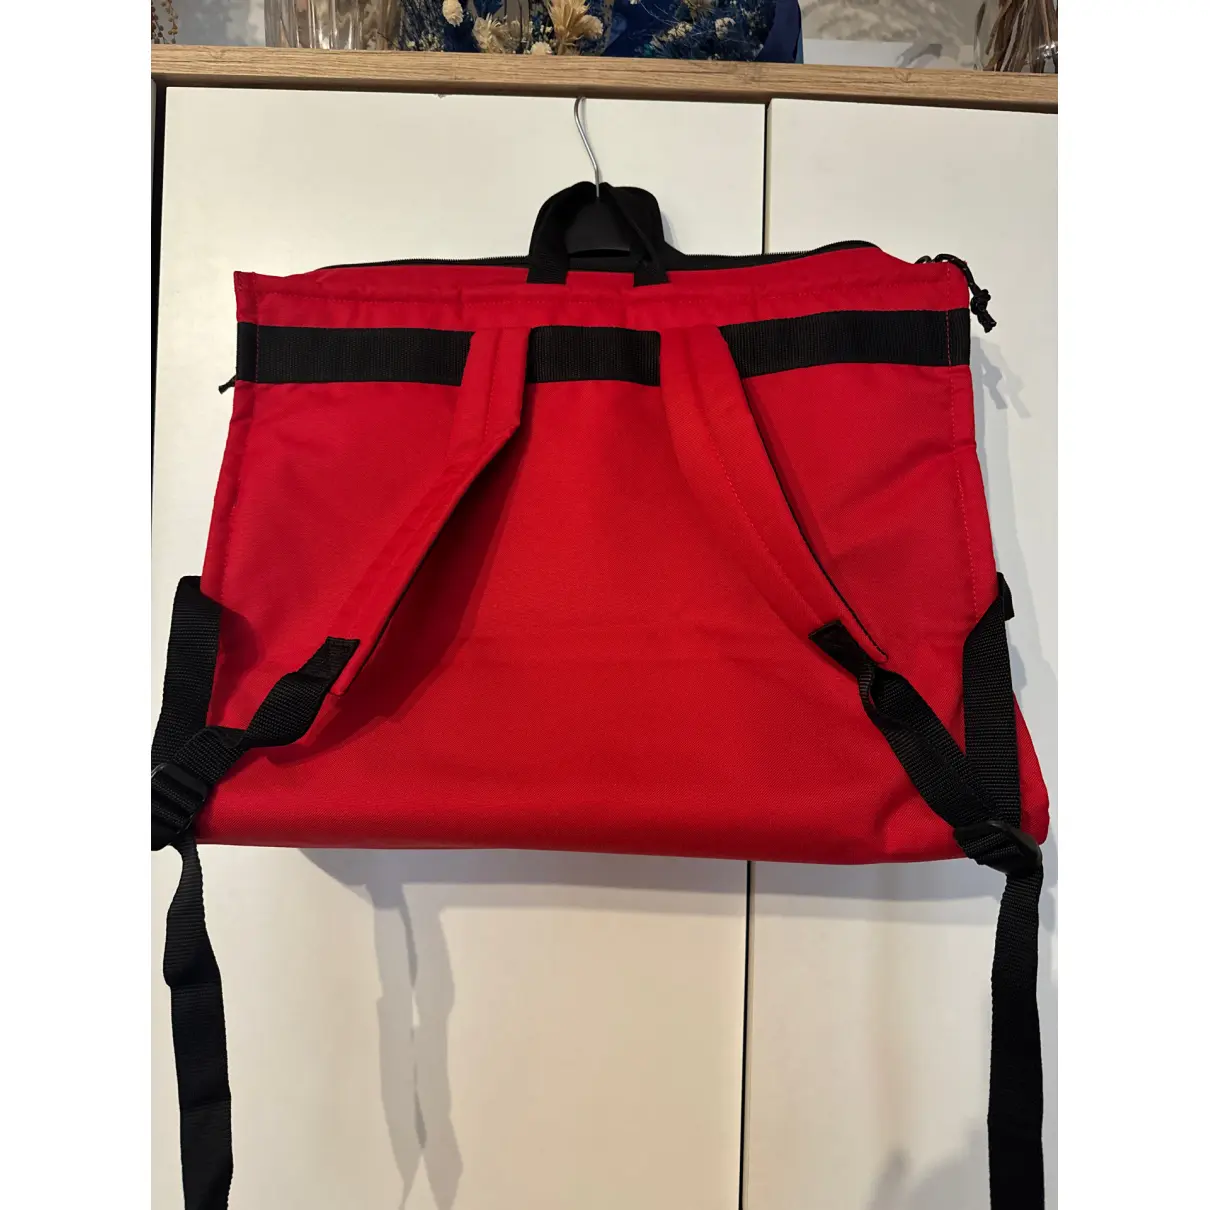 Buy Telfar Cloth backpack online